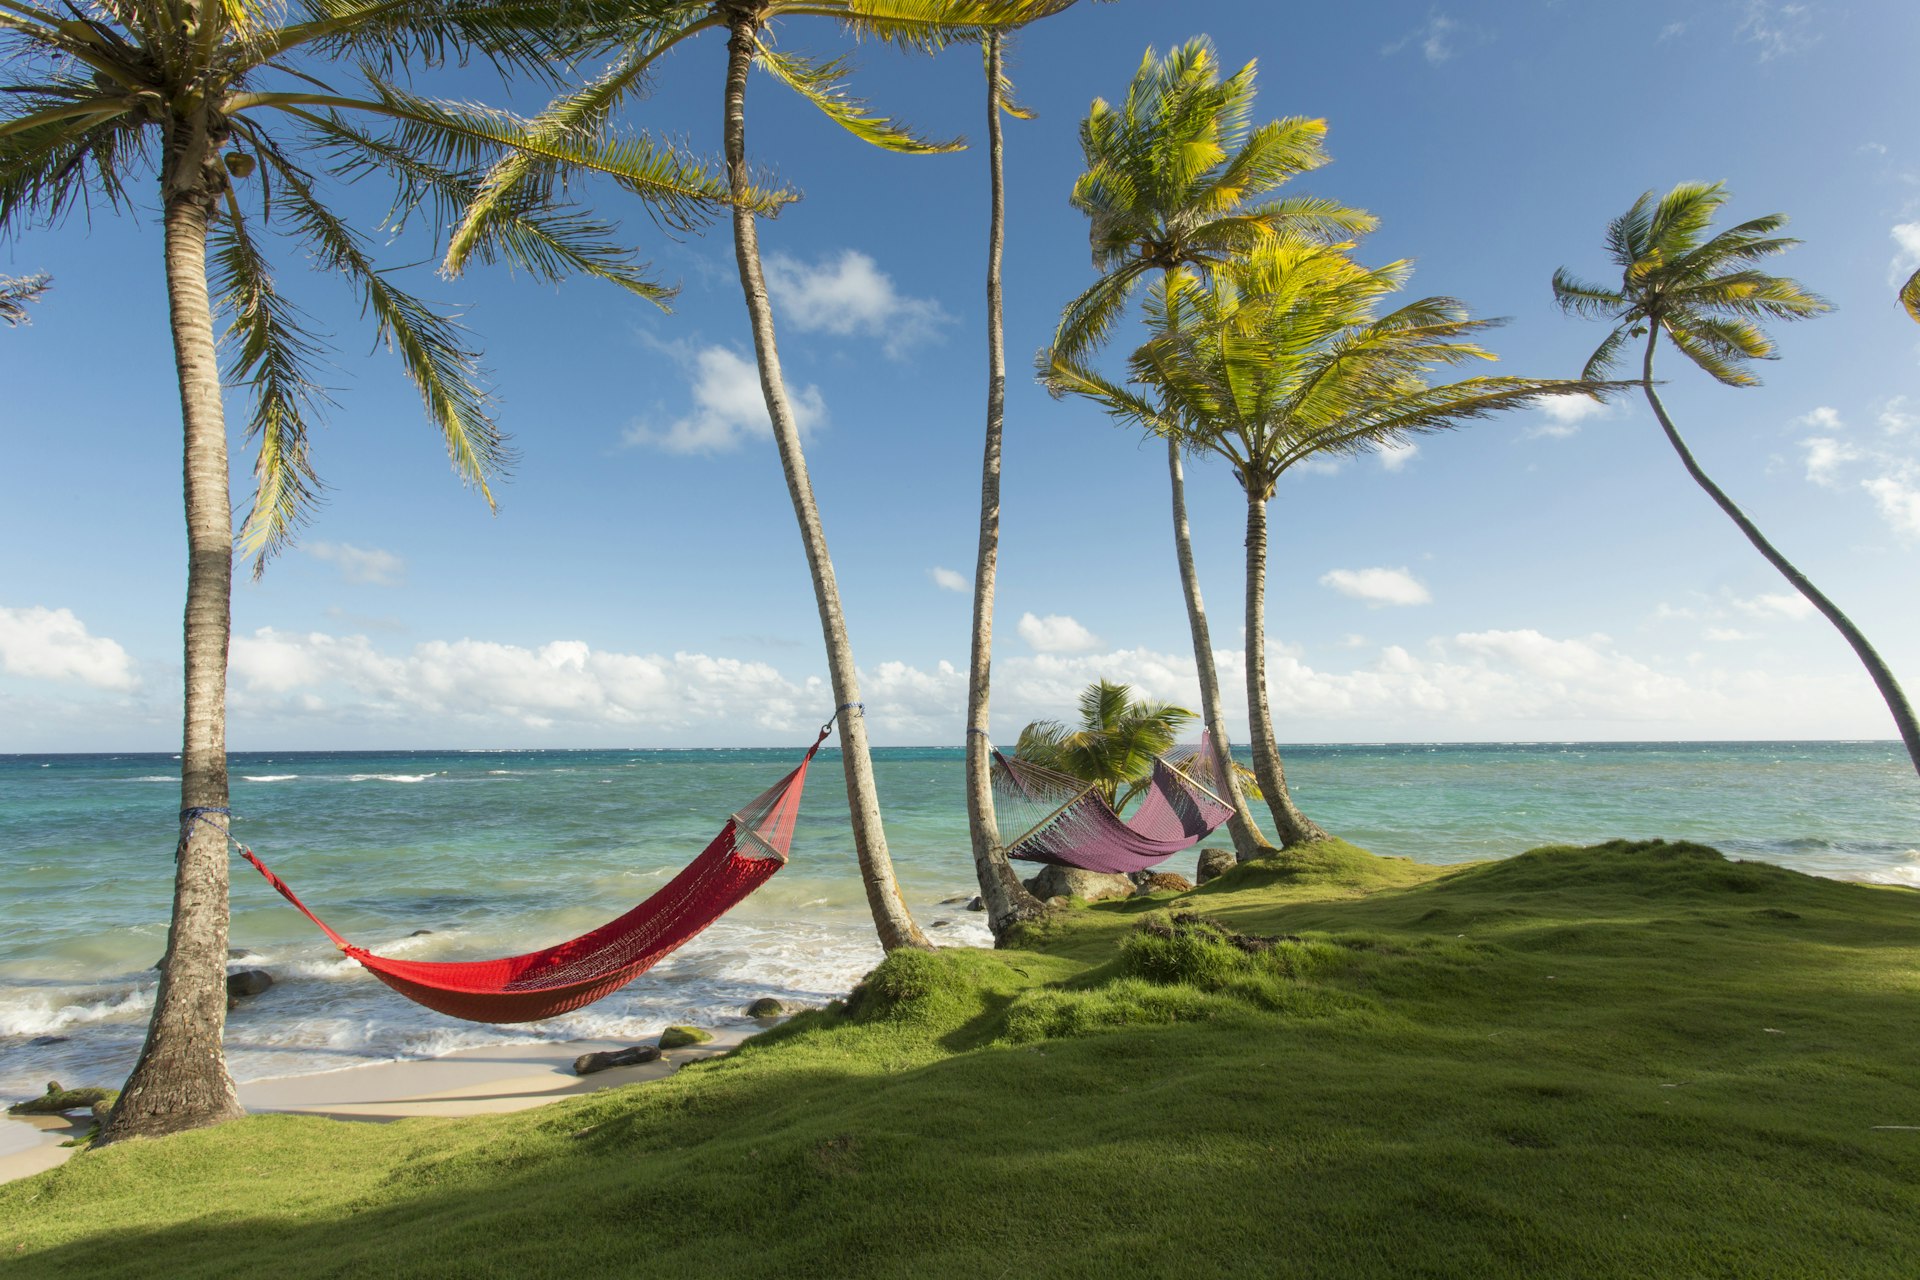 Hammocks strung between palm trees on Little Corn island, Nicaragua